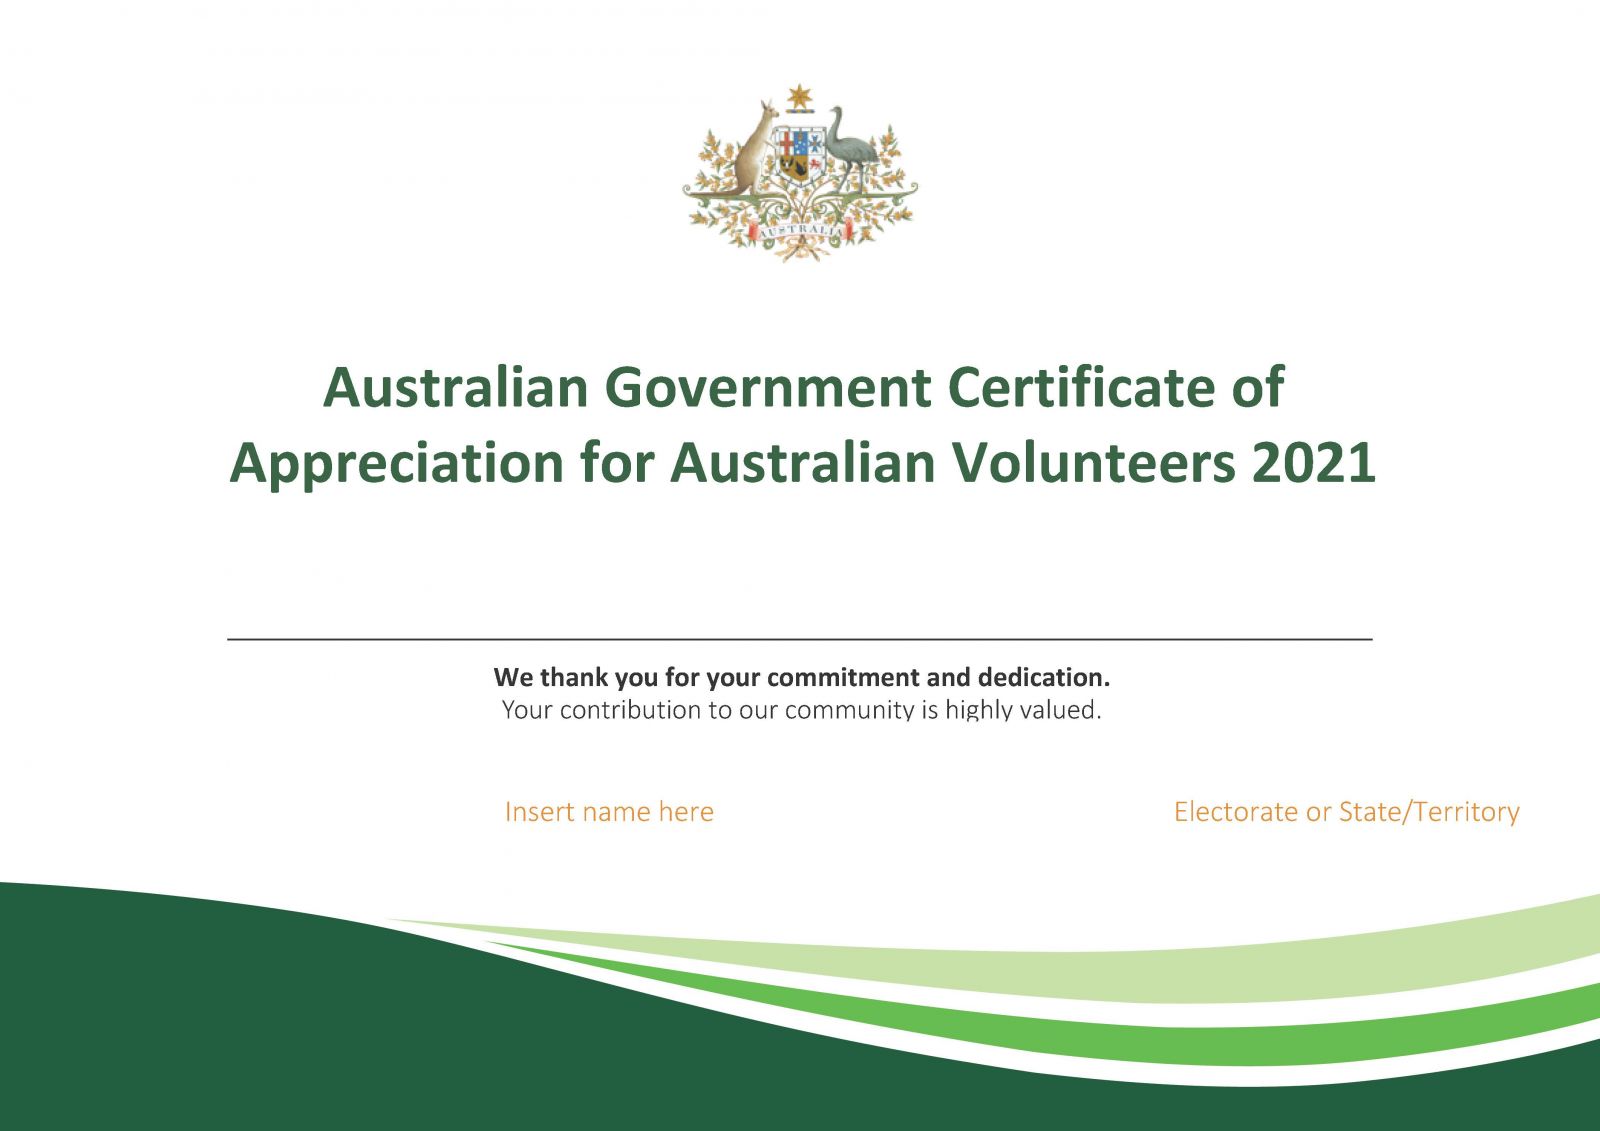 Australian Government Certificate of Appreciation for Volunteers